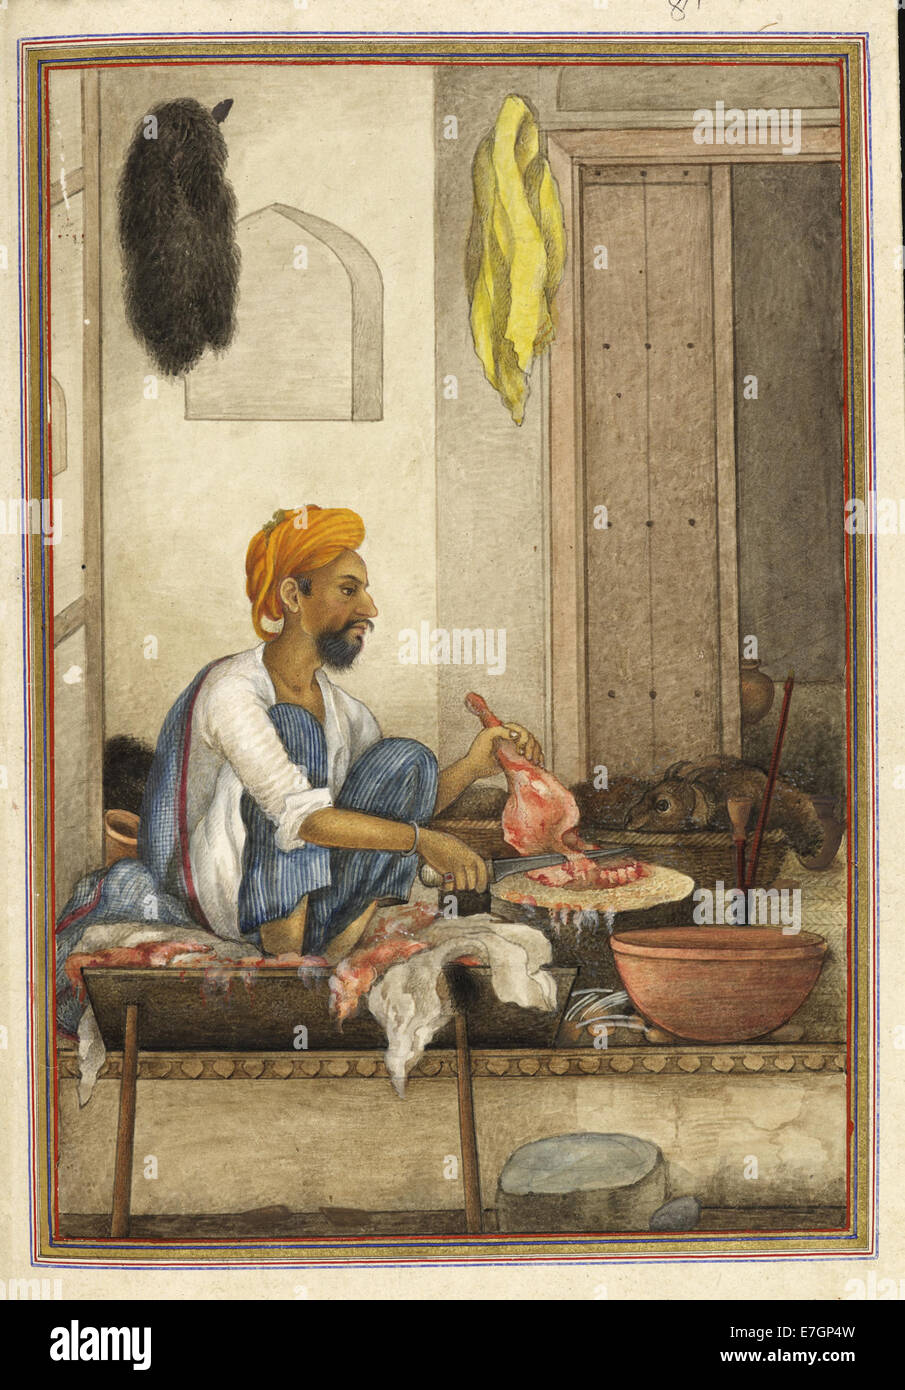 Badhak or Qassab, the caste of butcher - Tashrih al-aqvam (1825), f.320v - BL Add. 27255 Stock Photo